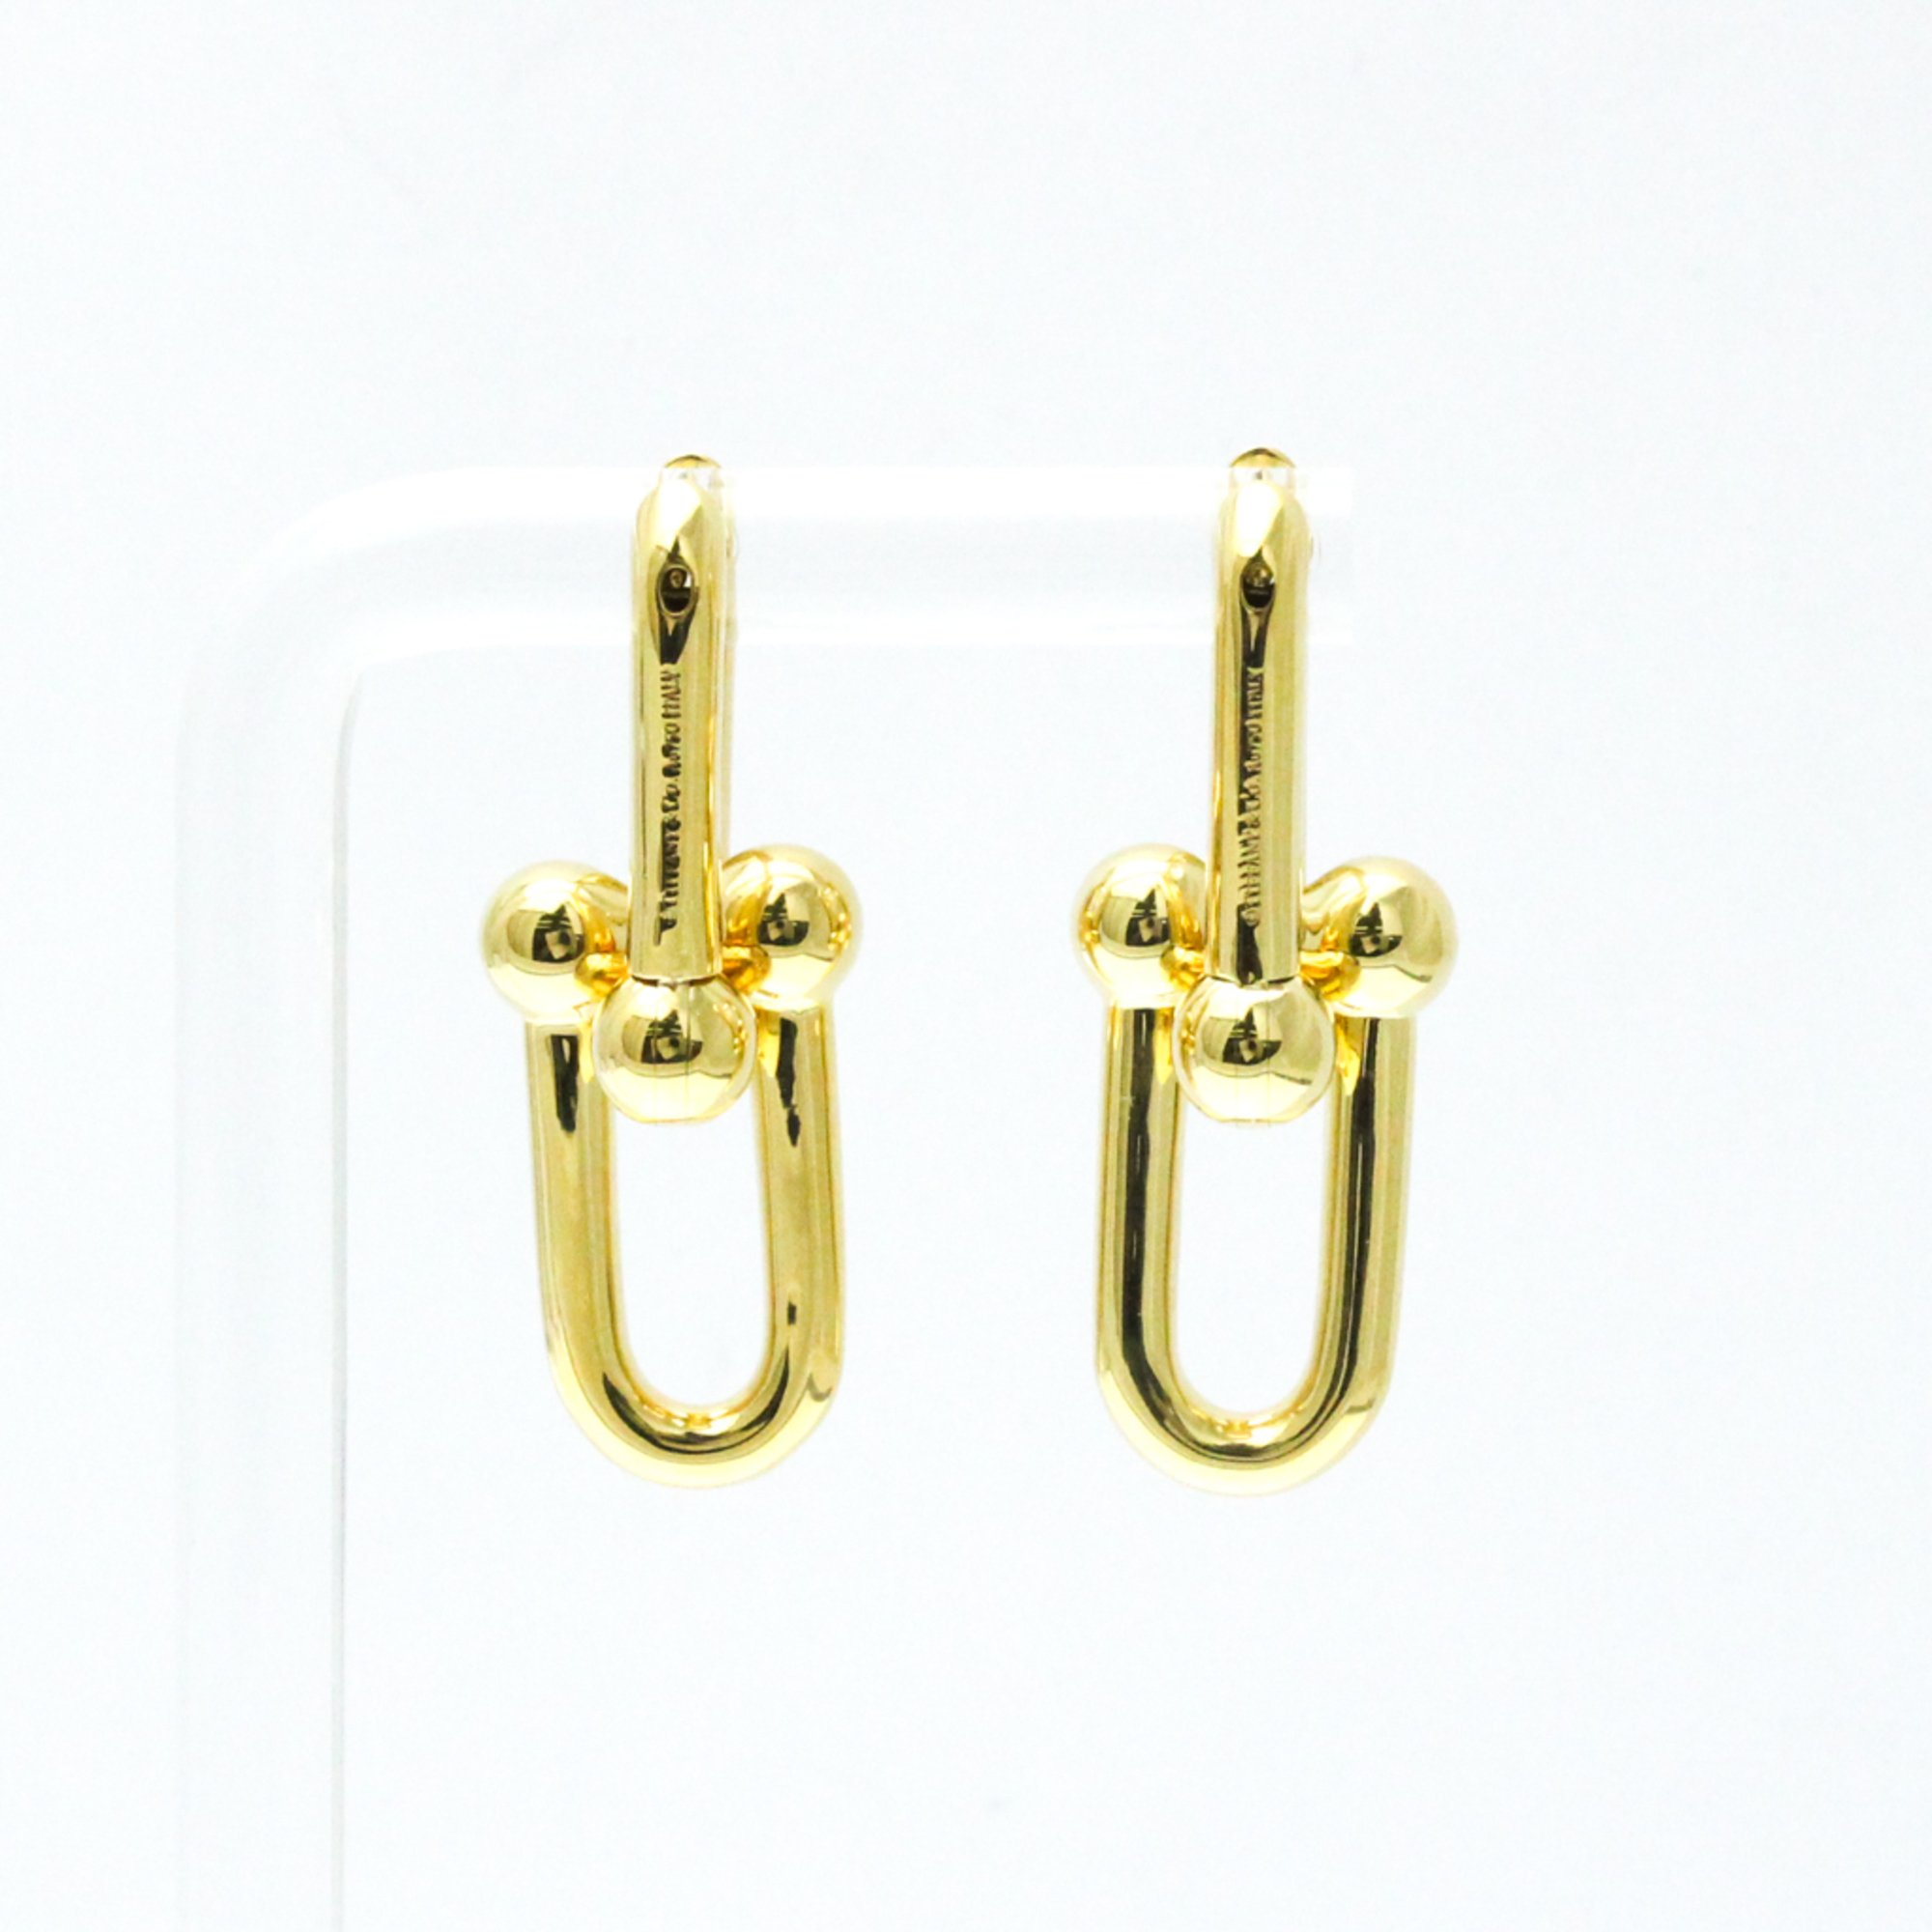 Tiffany Hardware Link Earrings Large Size No Stone Yellow Gold (18K) Drop Earrings Gold